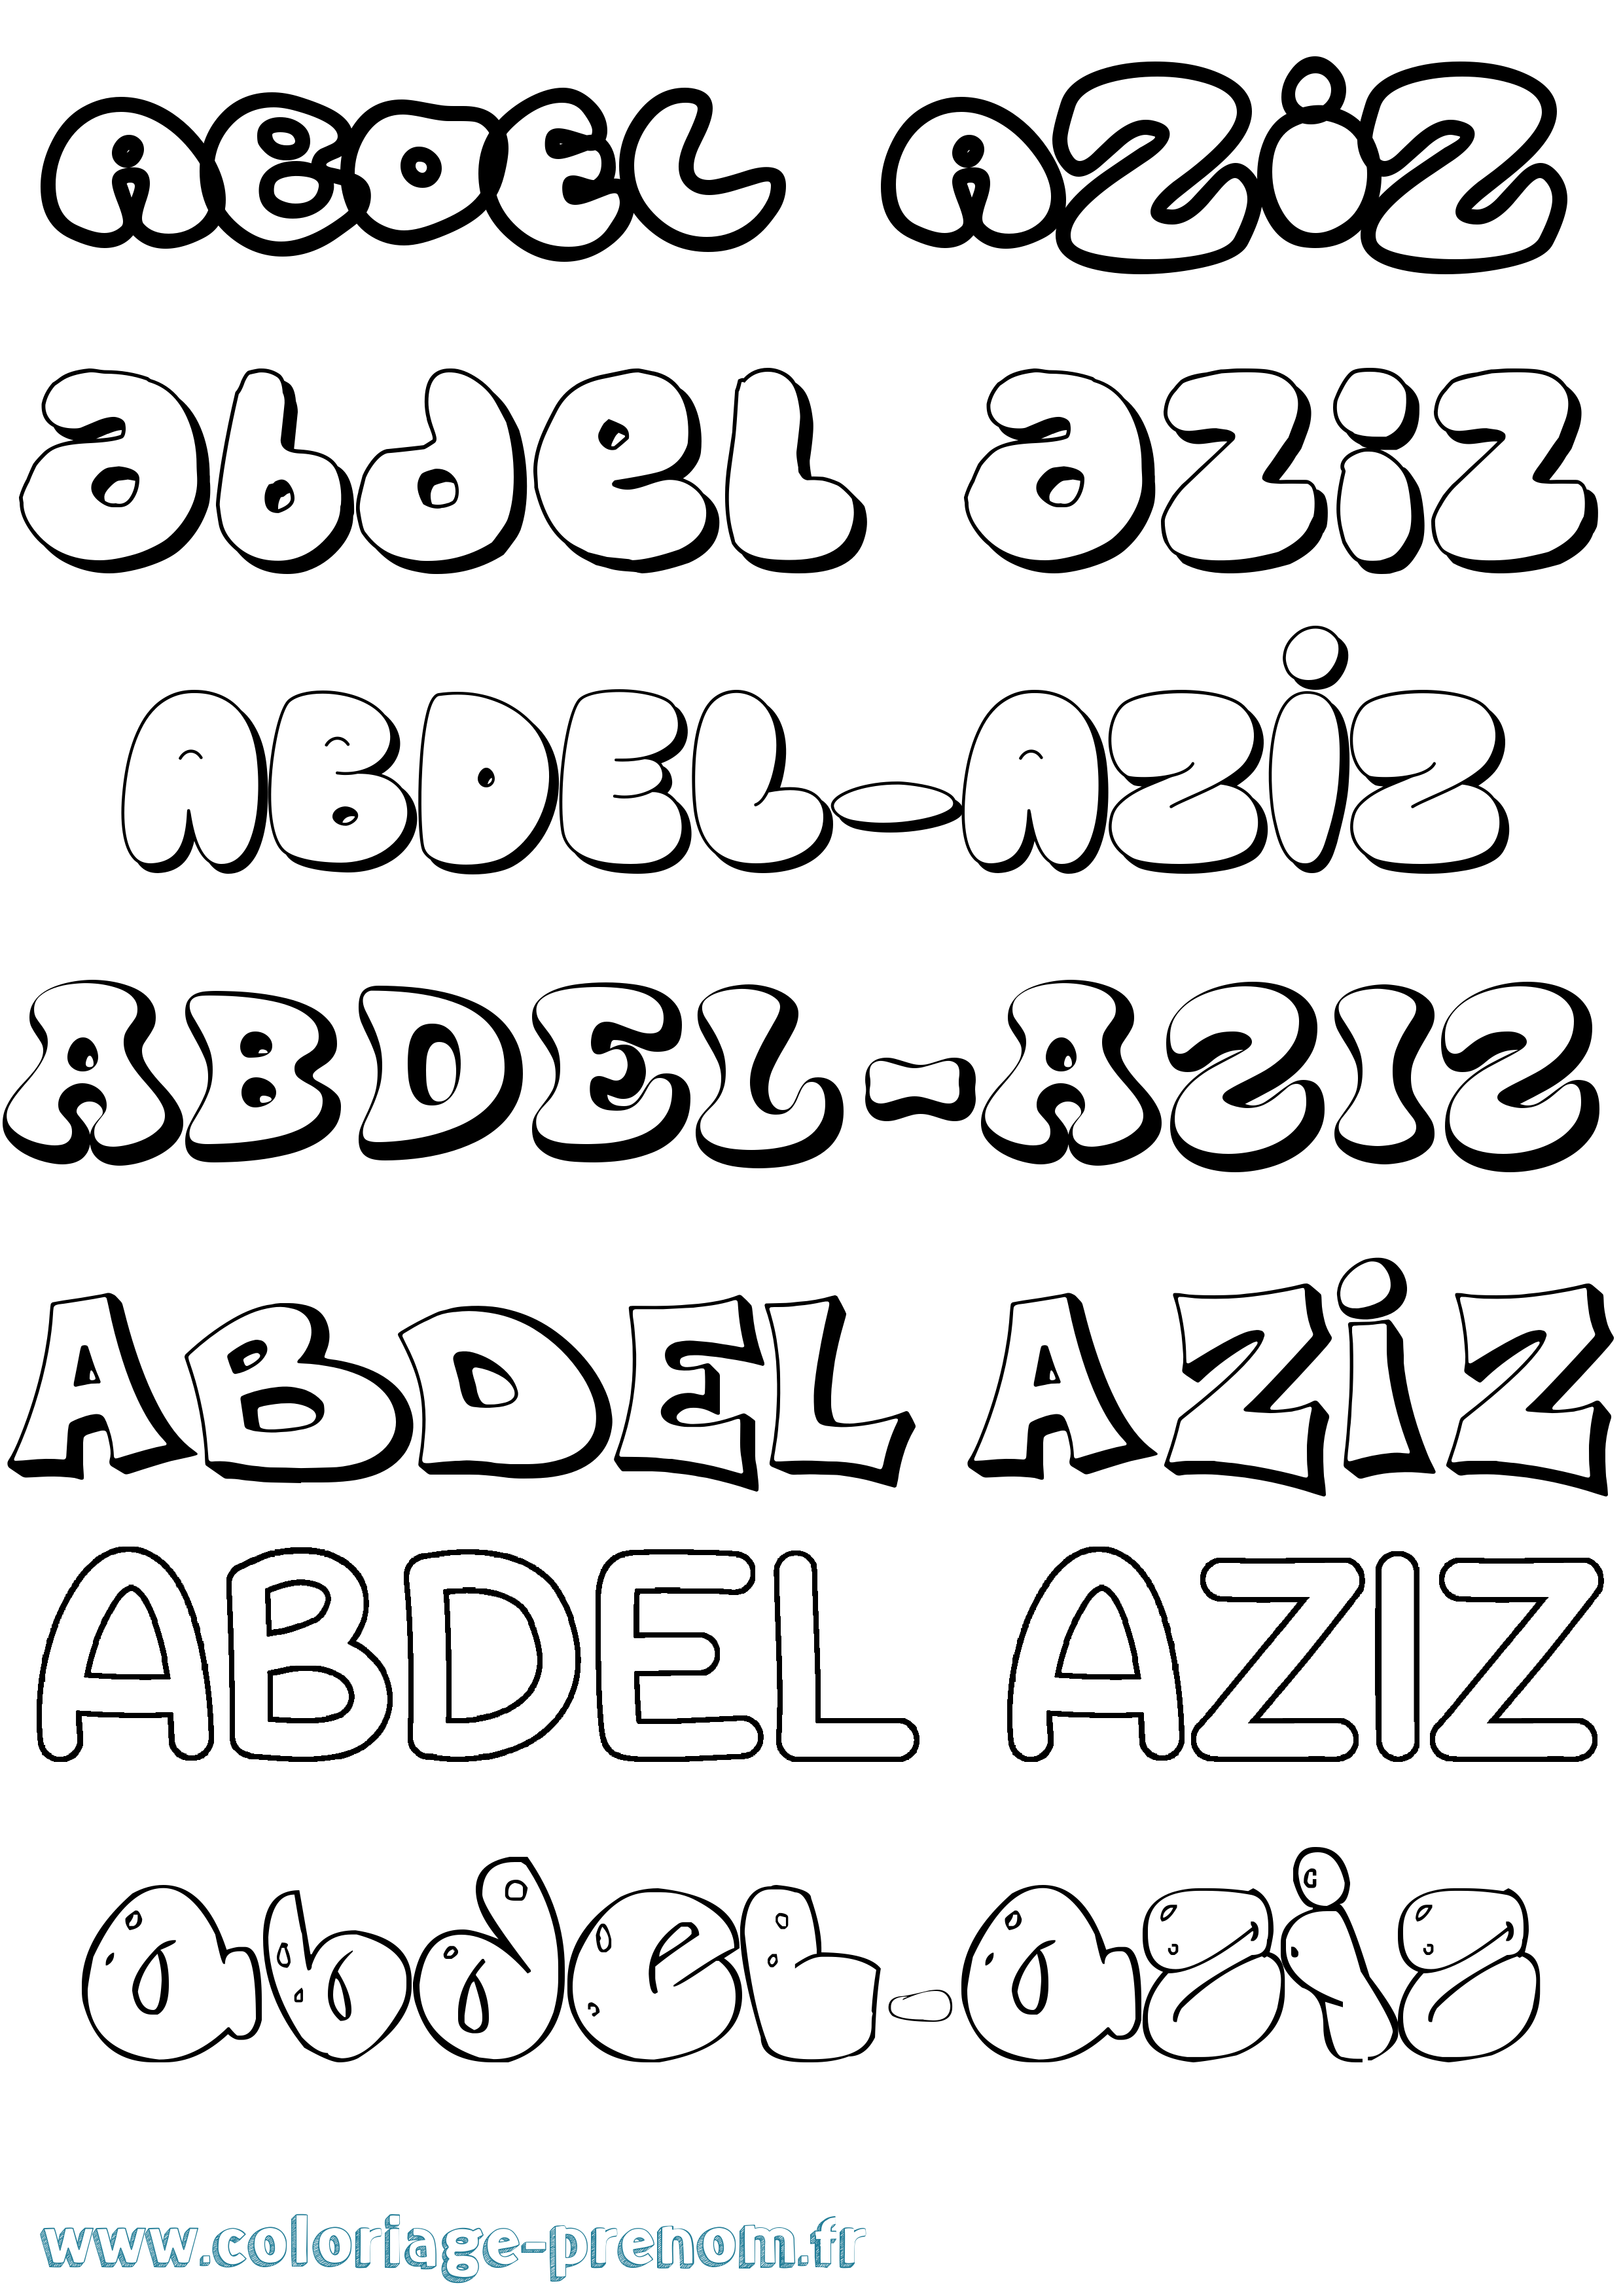 Coloriage prénom Abdel-Aziz Bubble